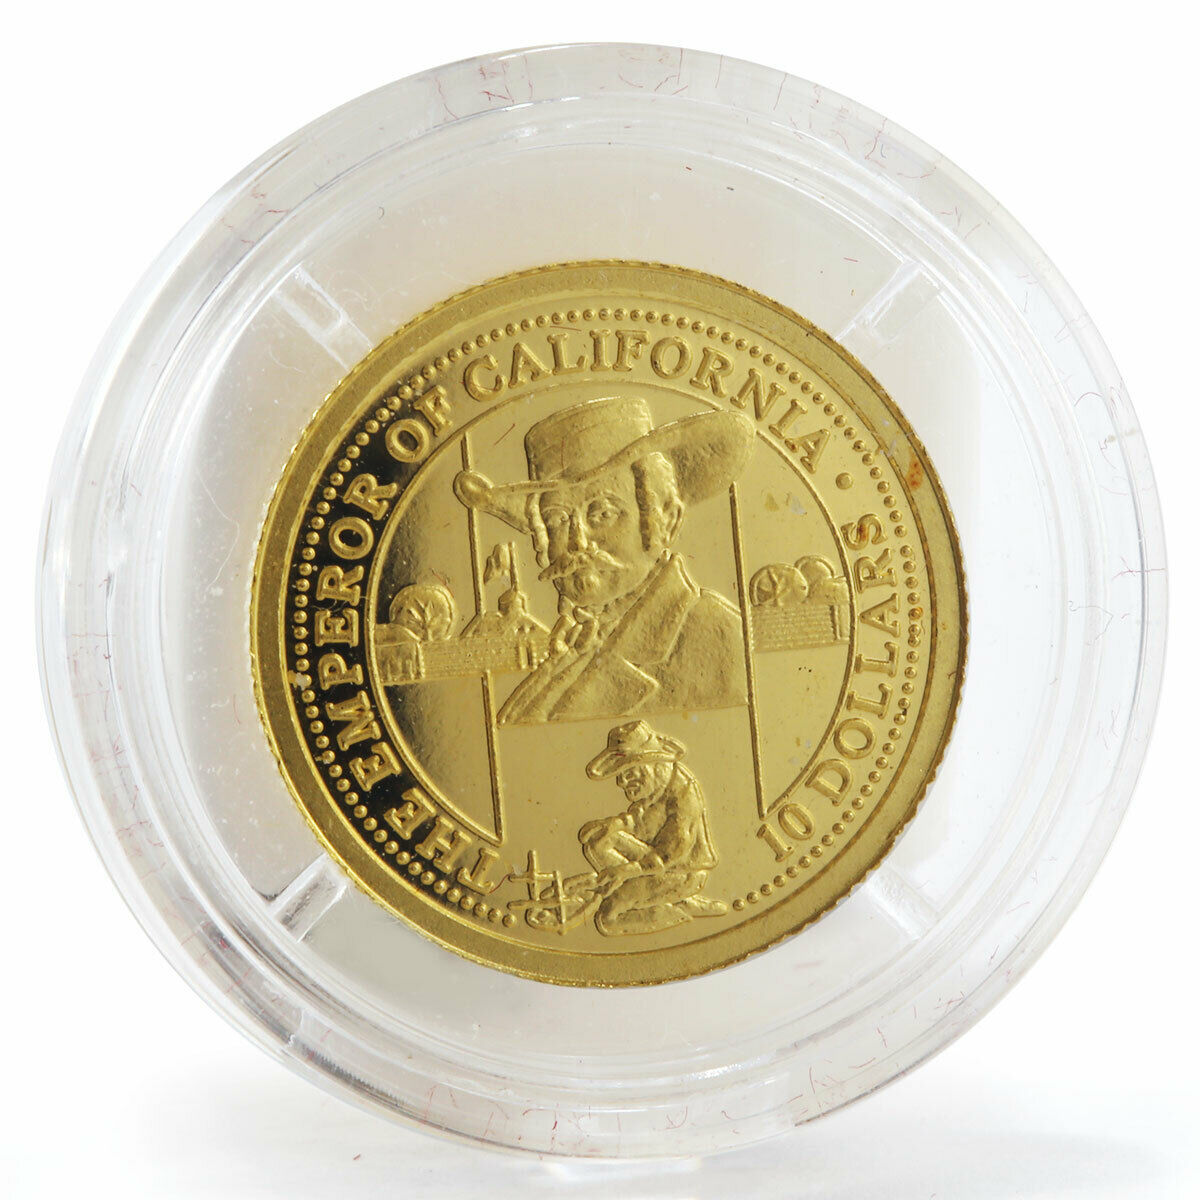 Cook Islands 10 dollars The Emperor of California gold coin 2006